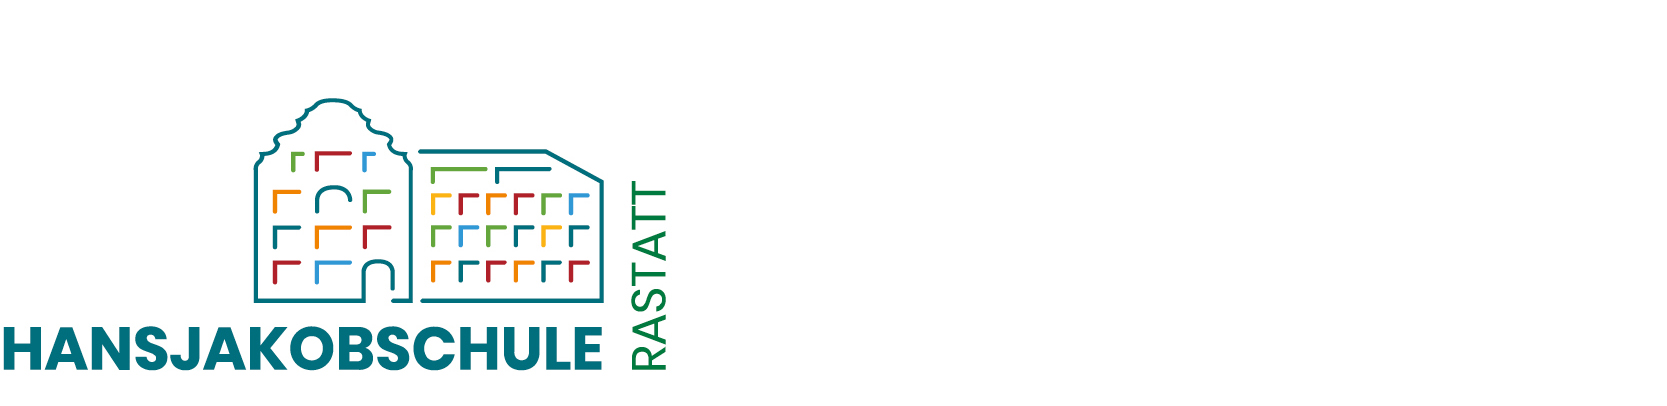 Logo der Hansjakobschule Rastatt